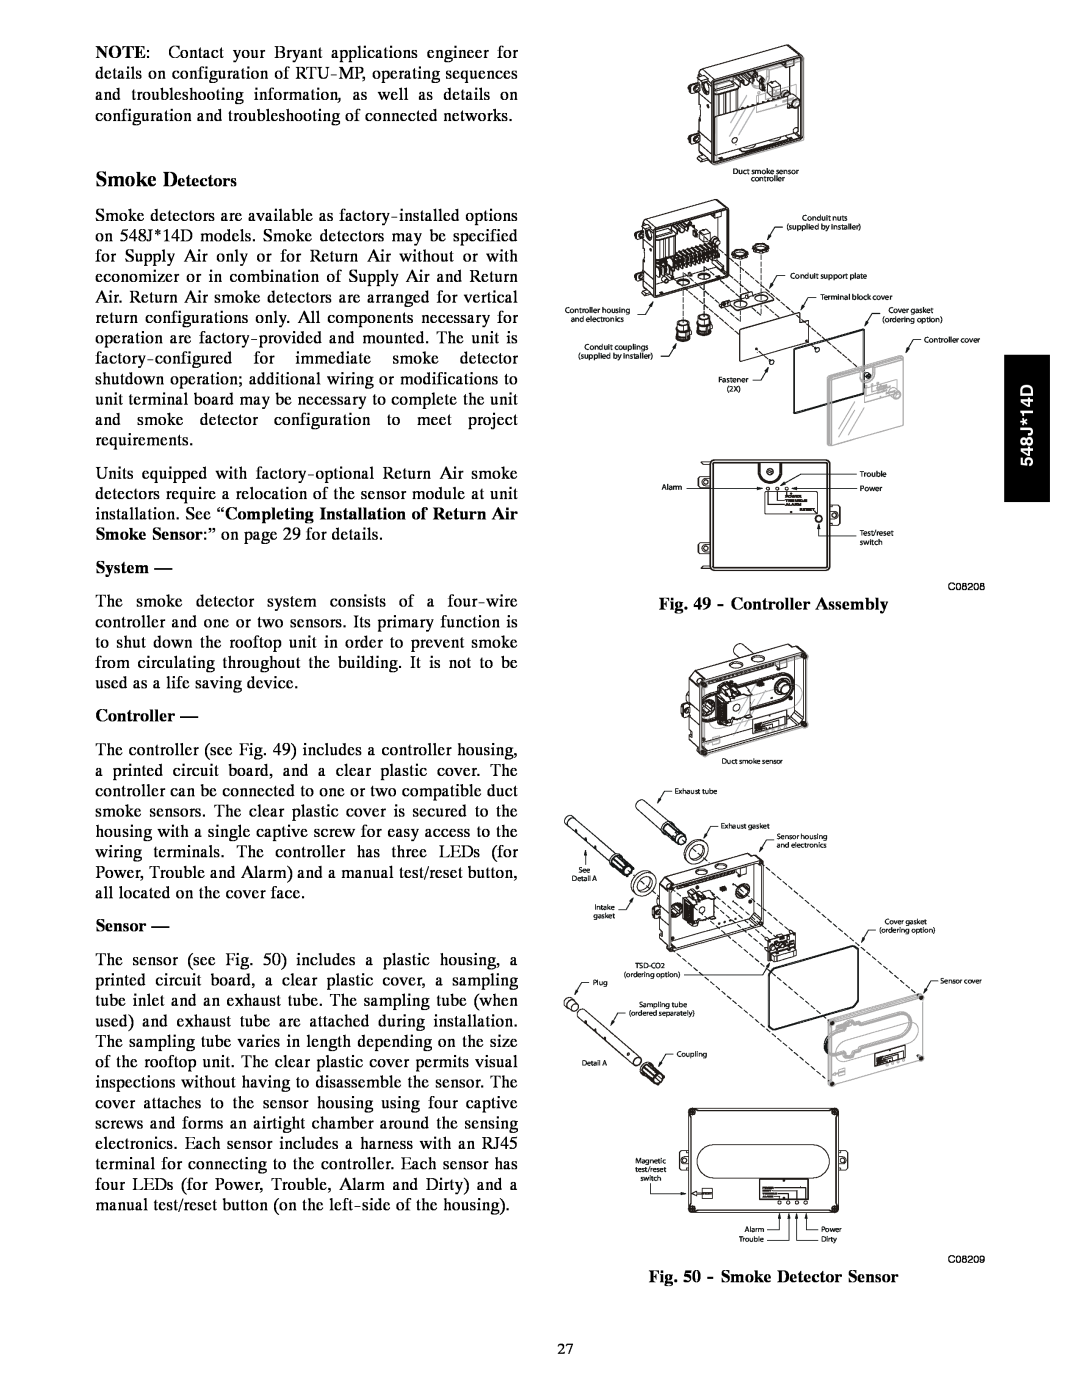 Bryant 548J*14D installation instructions Smoke Detectors, System, Controller Assembly, Smoke Detector Sensor 